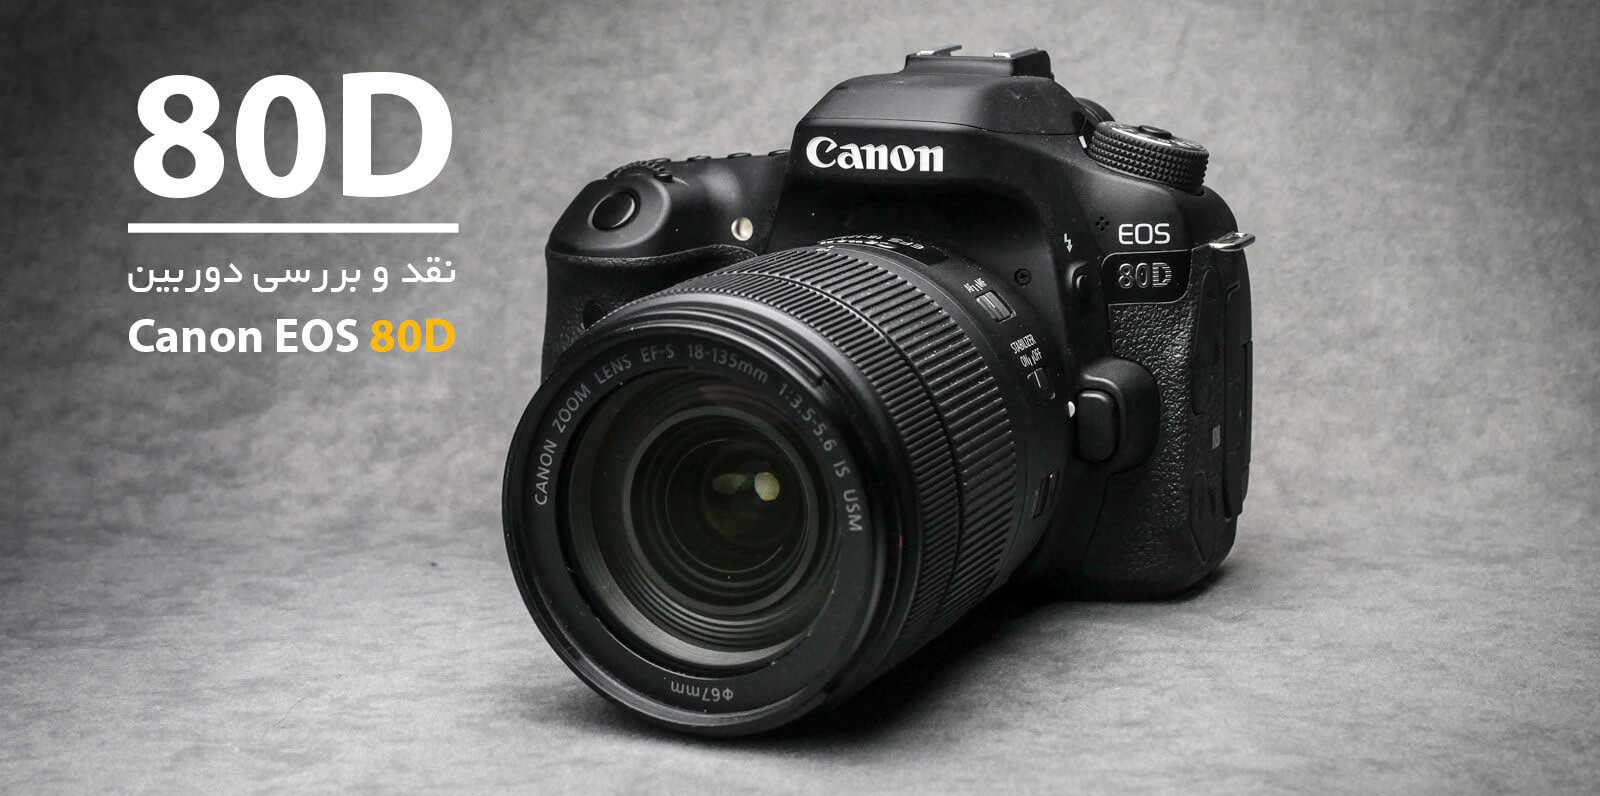 دوربین دیجیتال کانن مدل Eos 80D EF S 18-135mm f/3.5-5.6 IS USM Kit